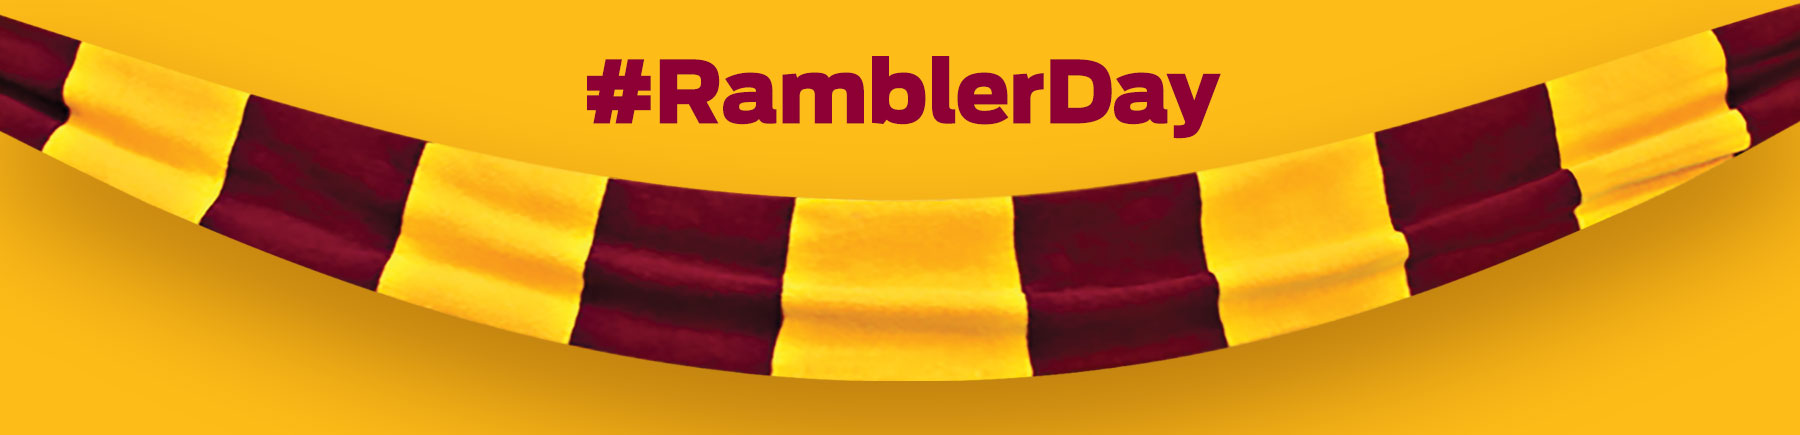 Rambler Day